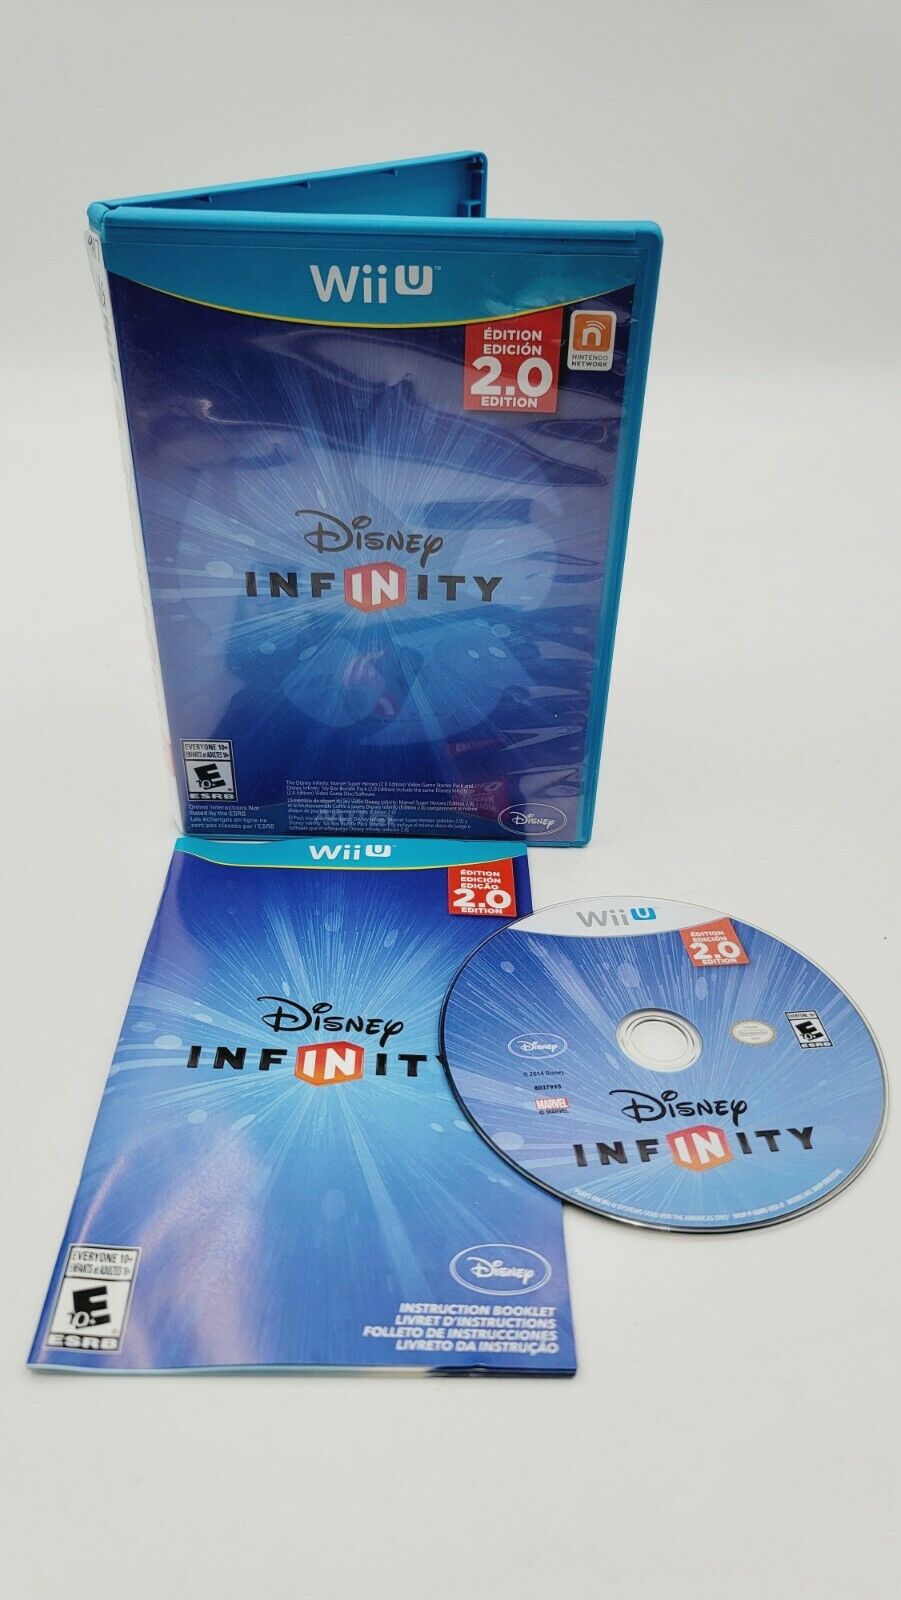 Disney: Infinity 2.0 Edition - Darkside Records